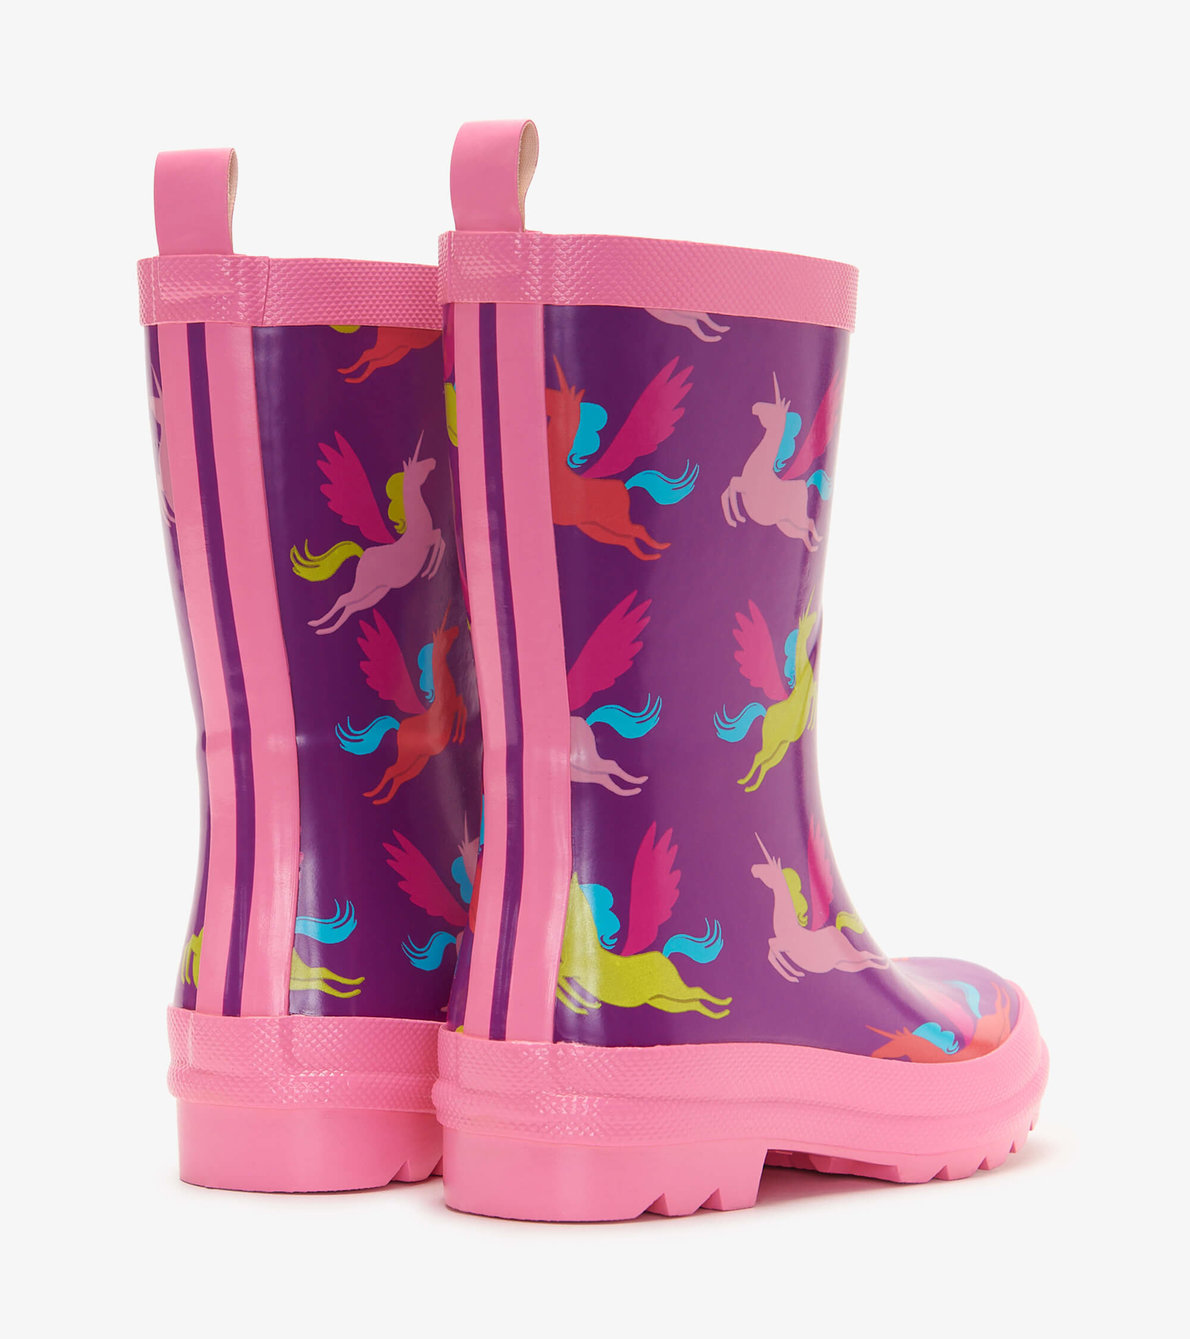 View larger image of Pretty Unicorn Shiny Kids Rain Boots